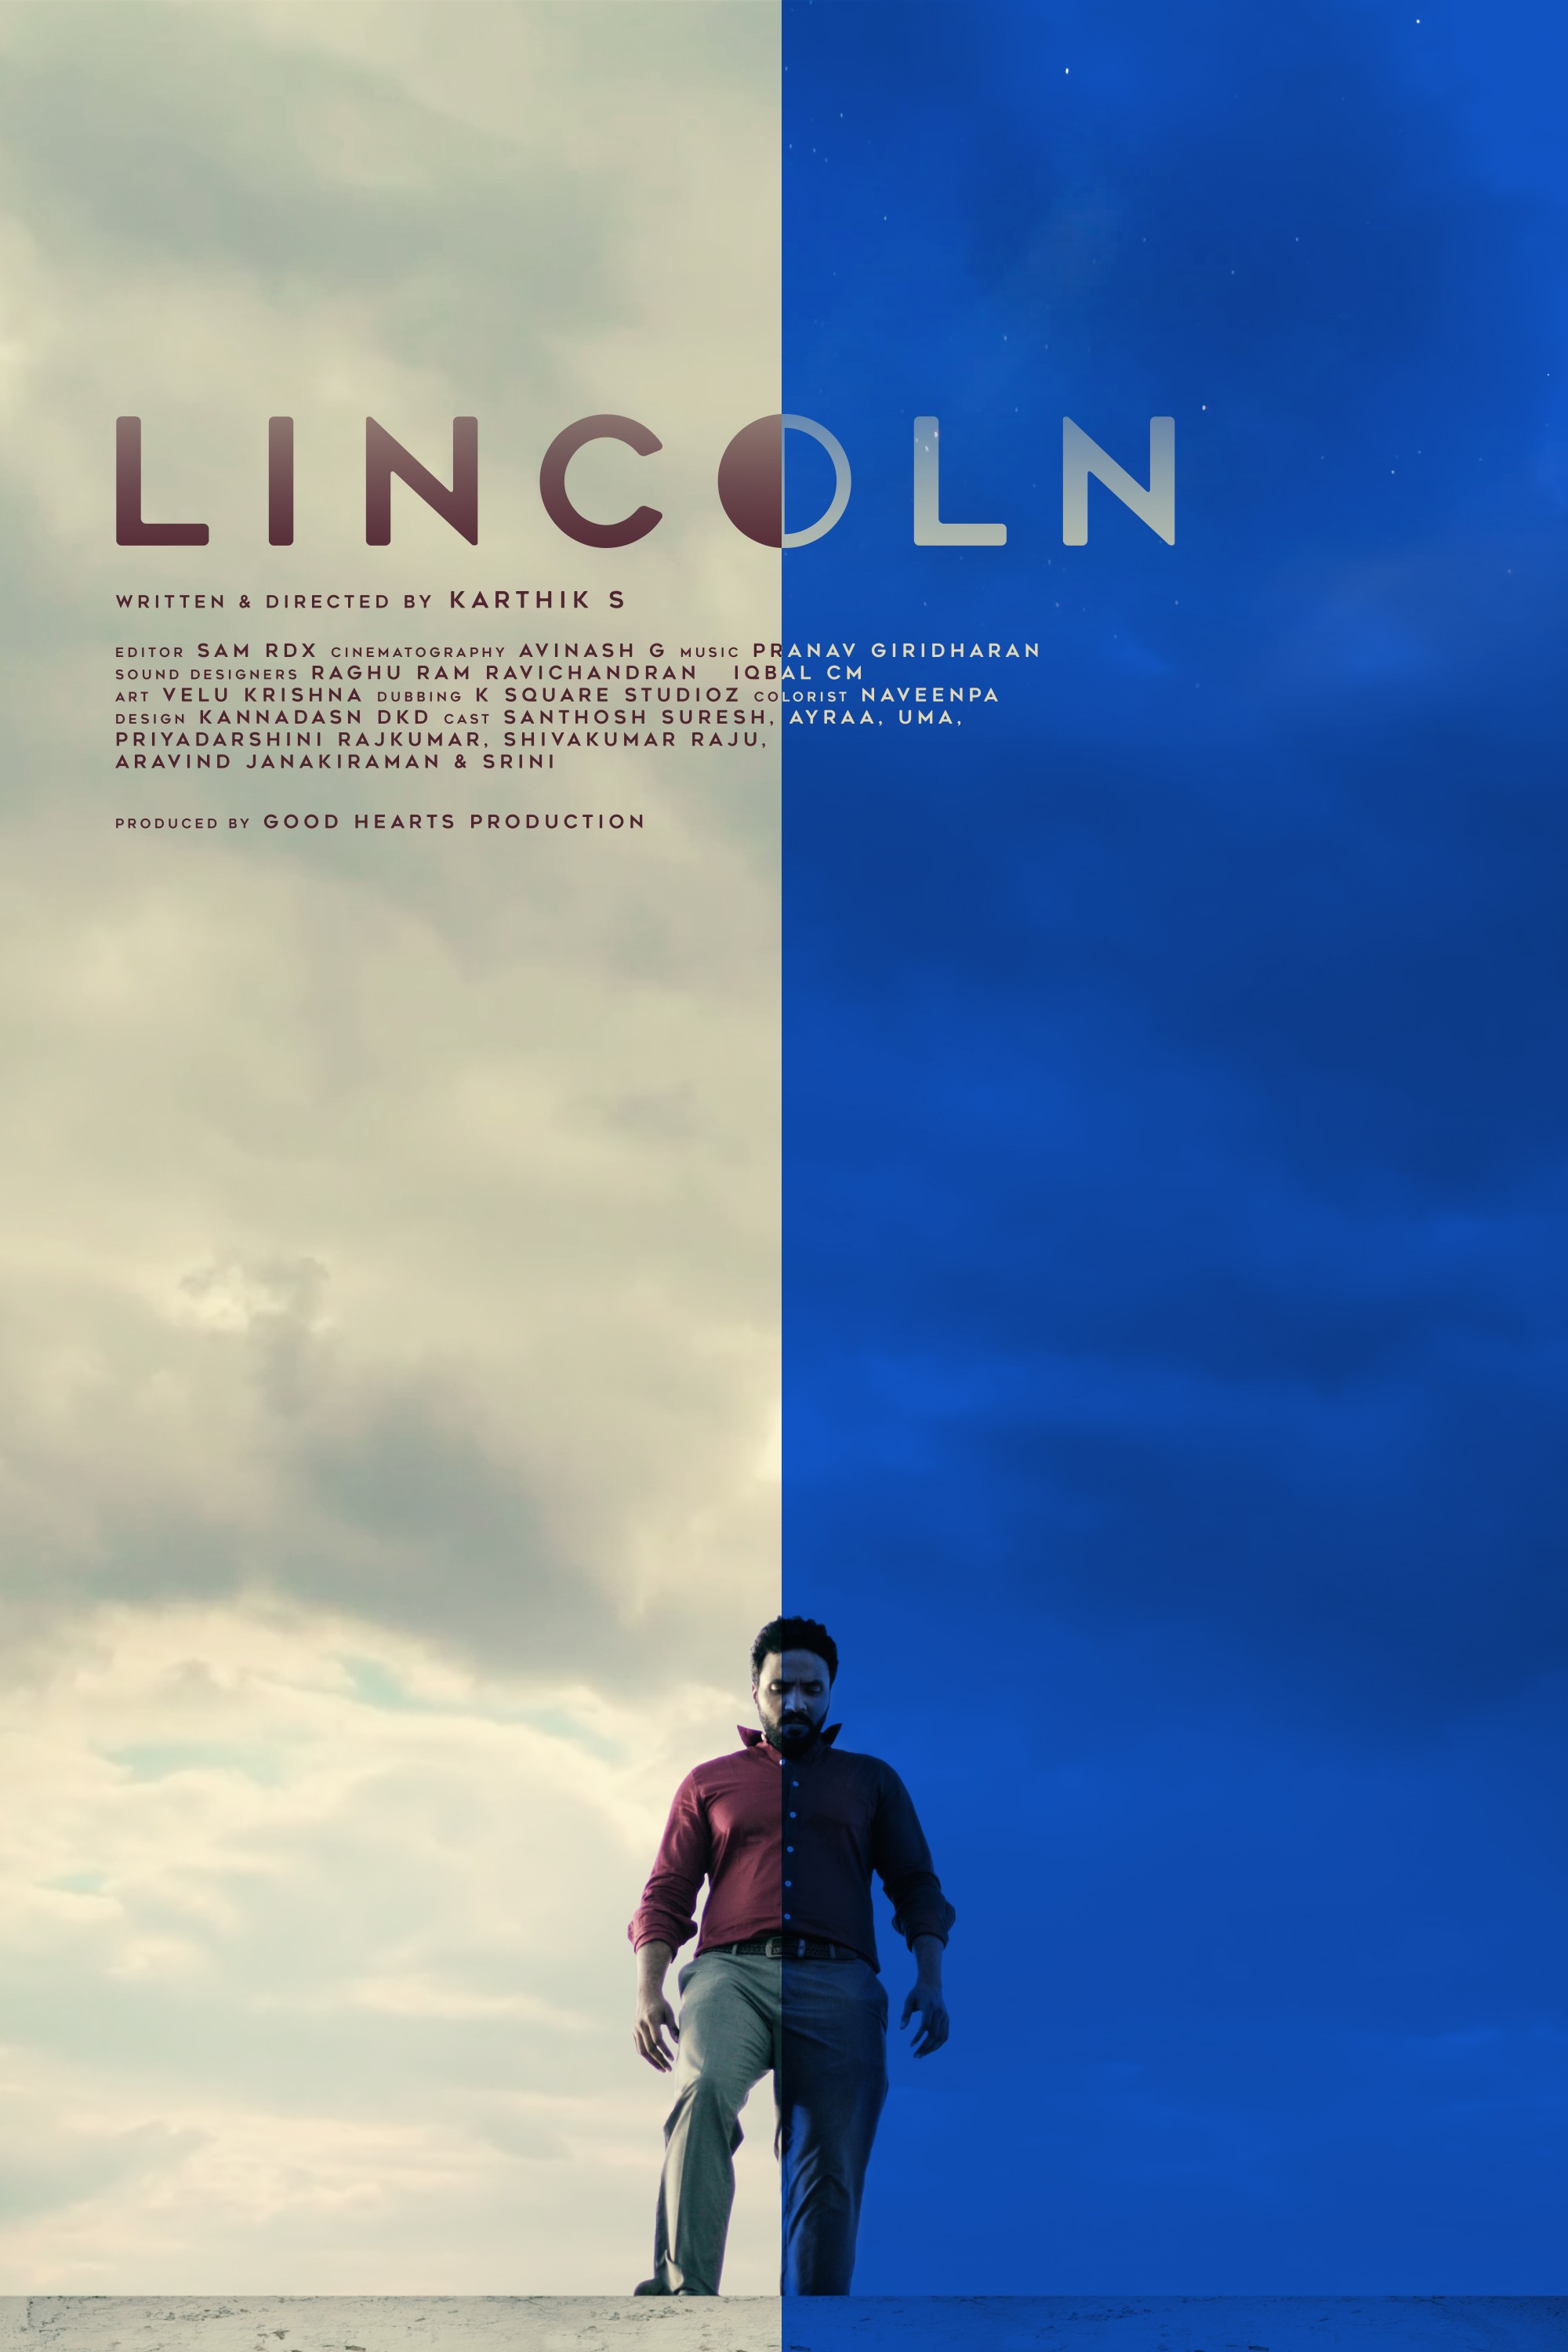 lincoln movie production company